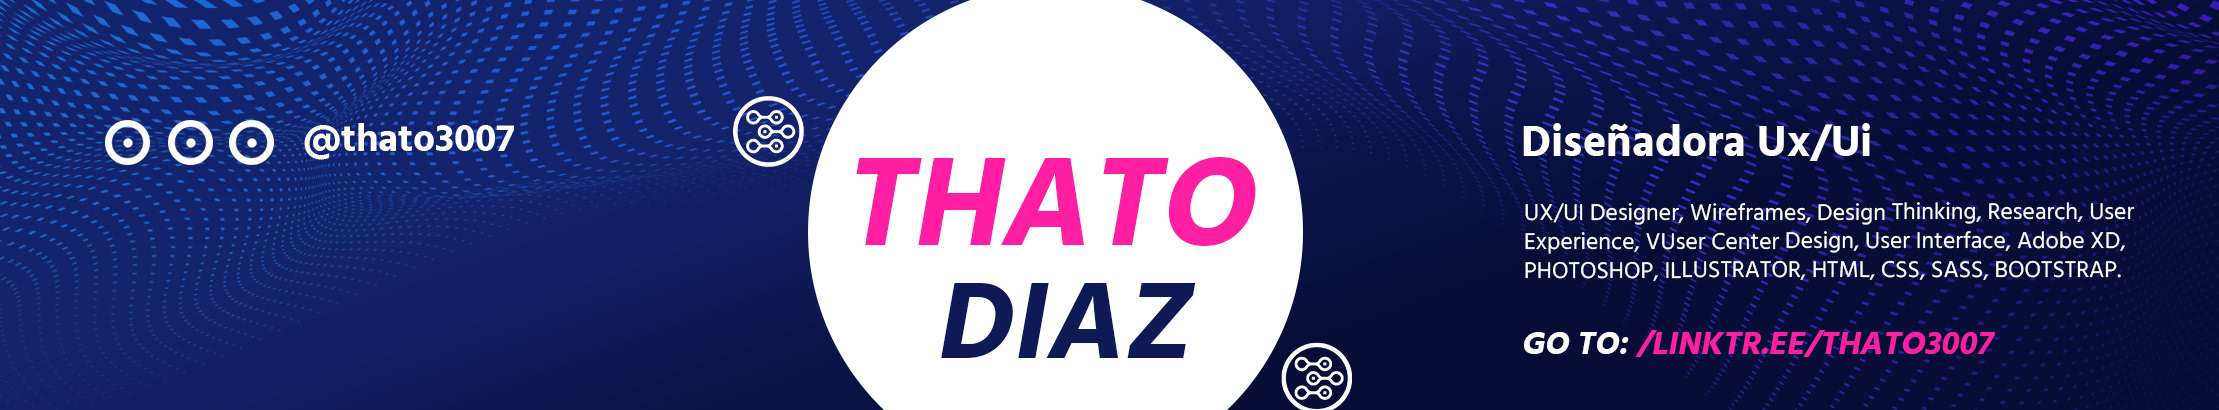 Tatiana Diaz (Thato)'s profile banner